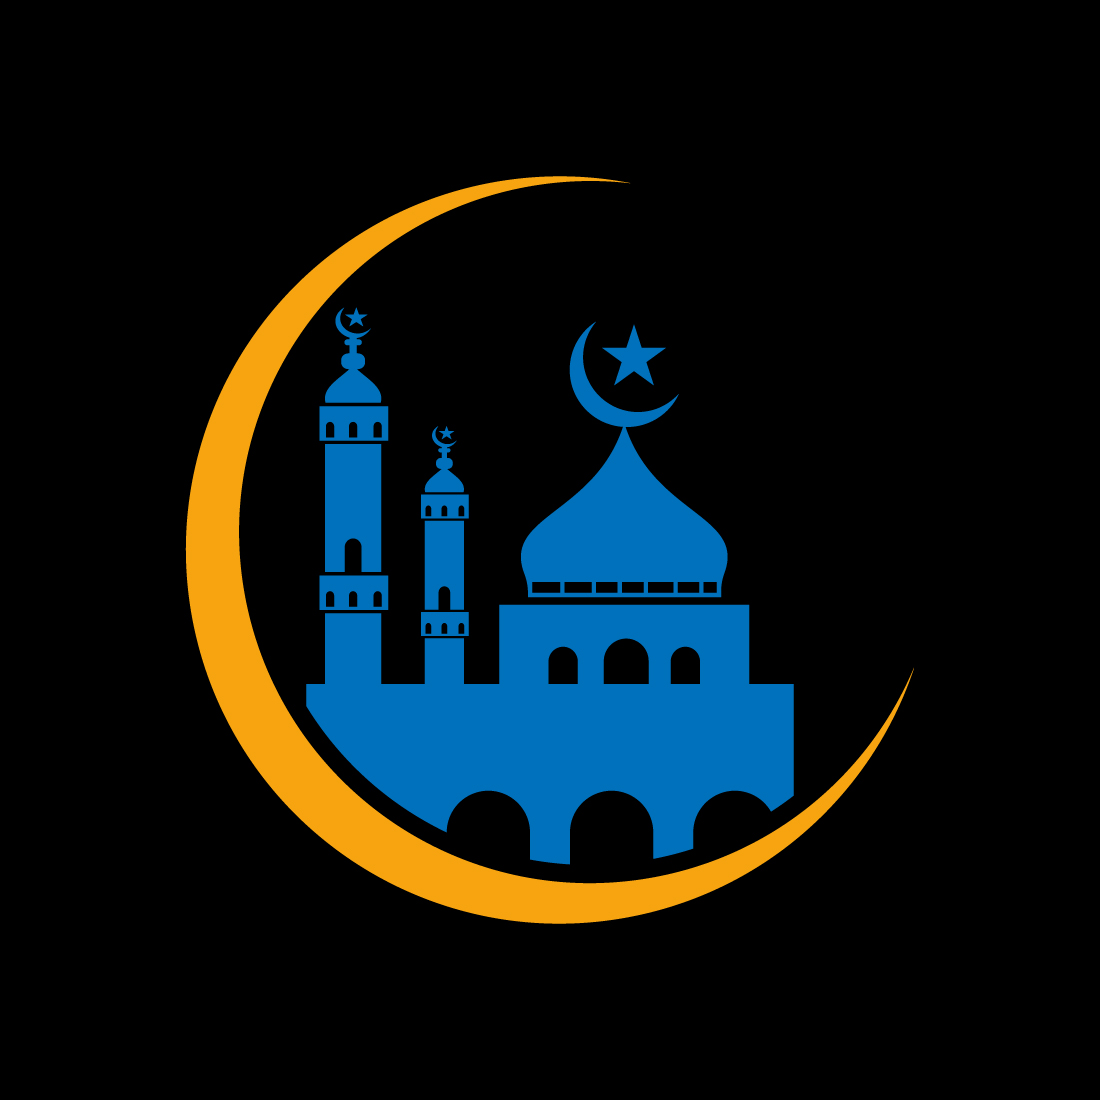 Mosque logo design, Islamic logo template, Vector illustration cover image.